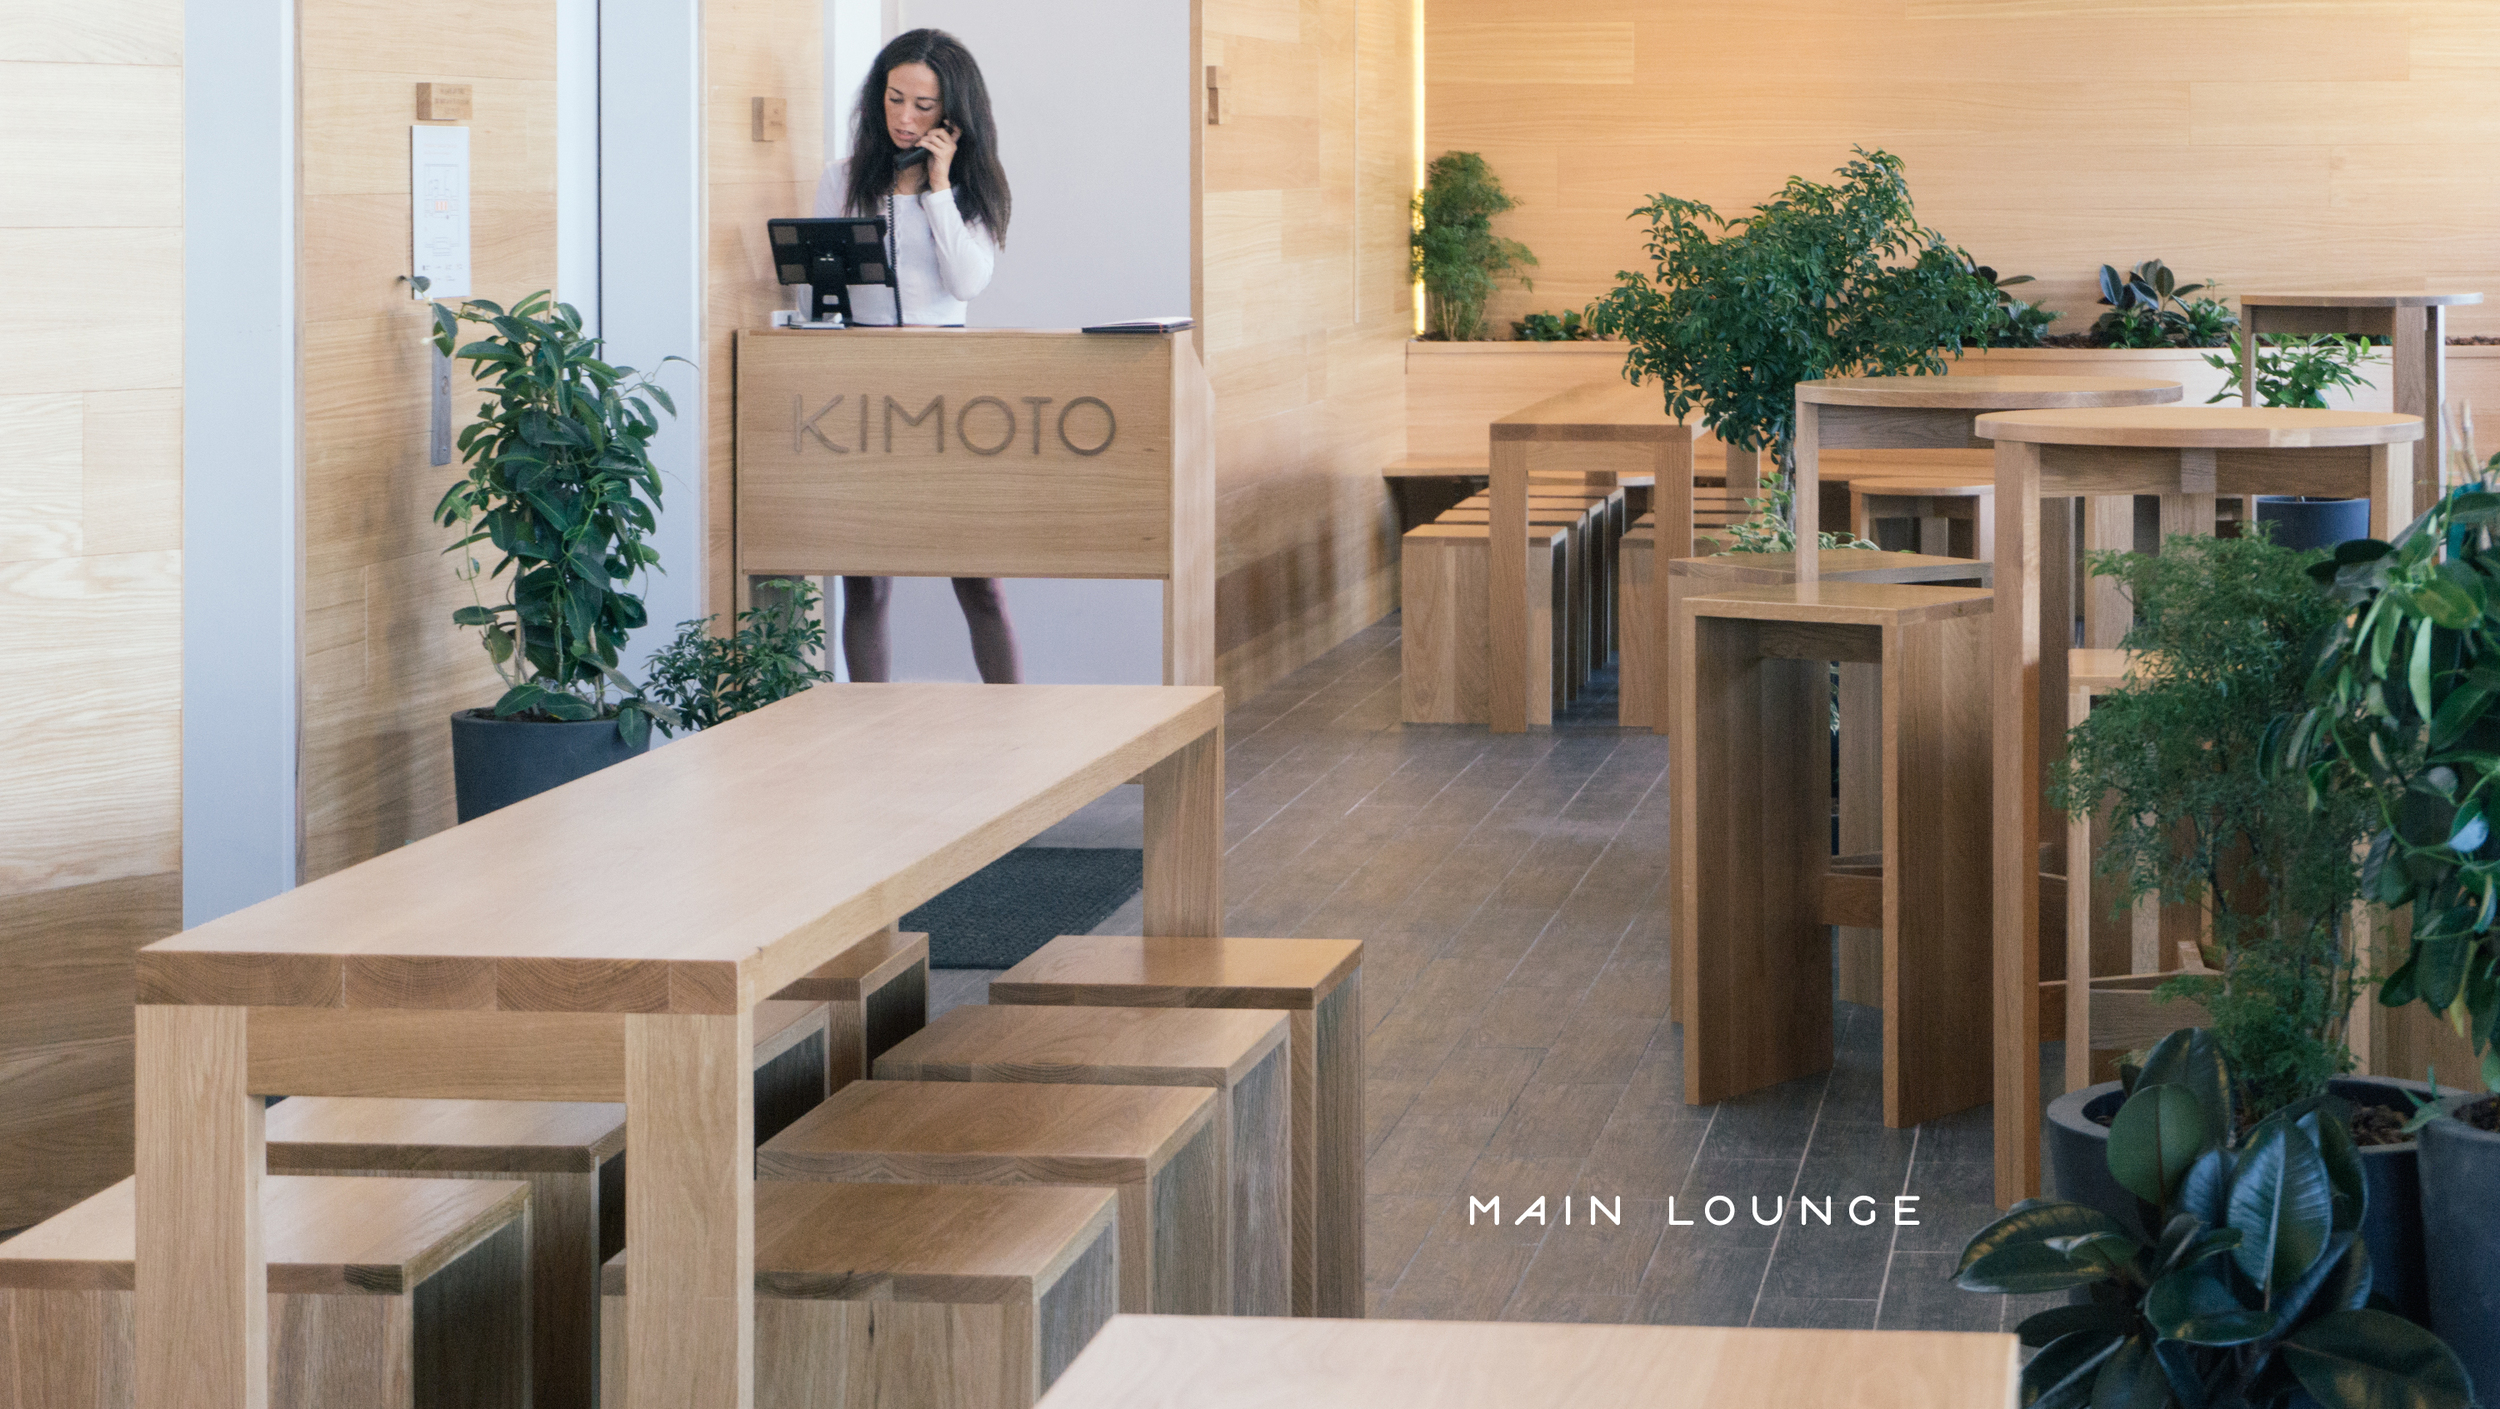 Kimoto Main Lounge